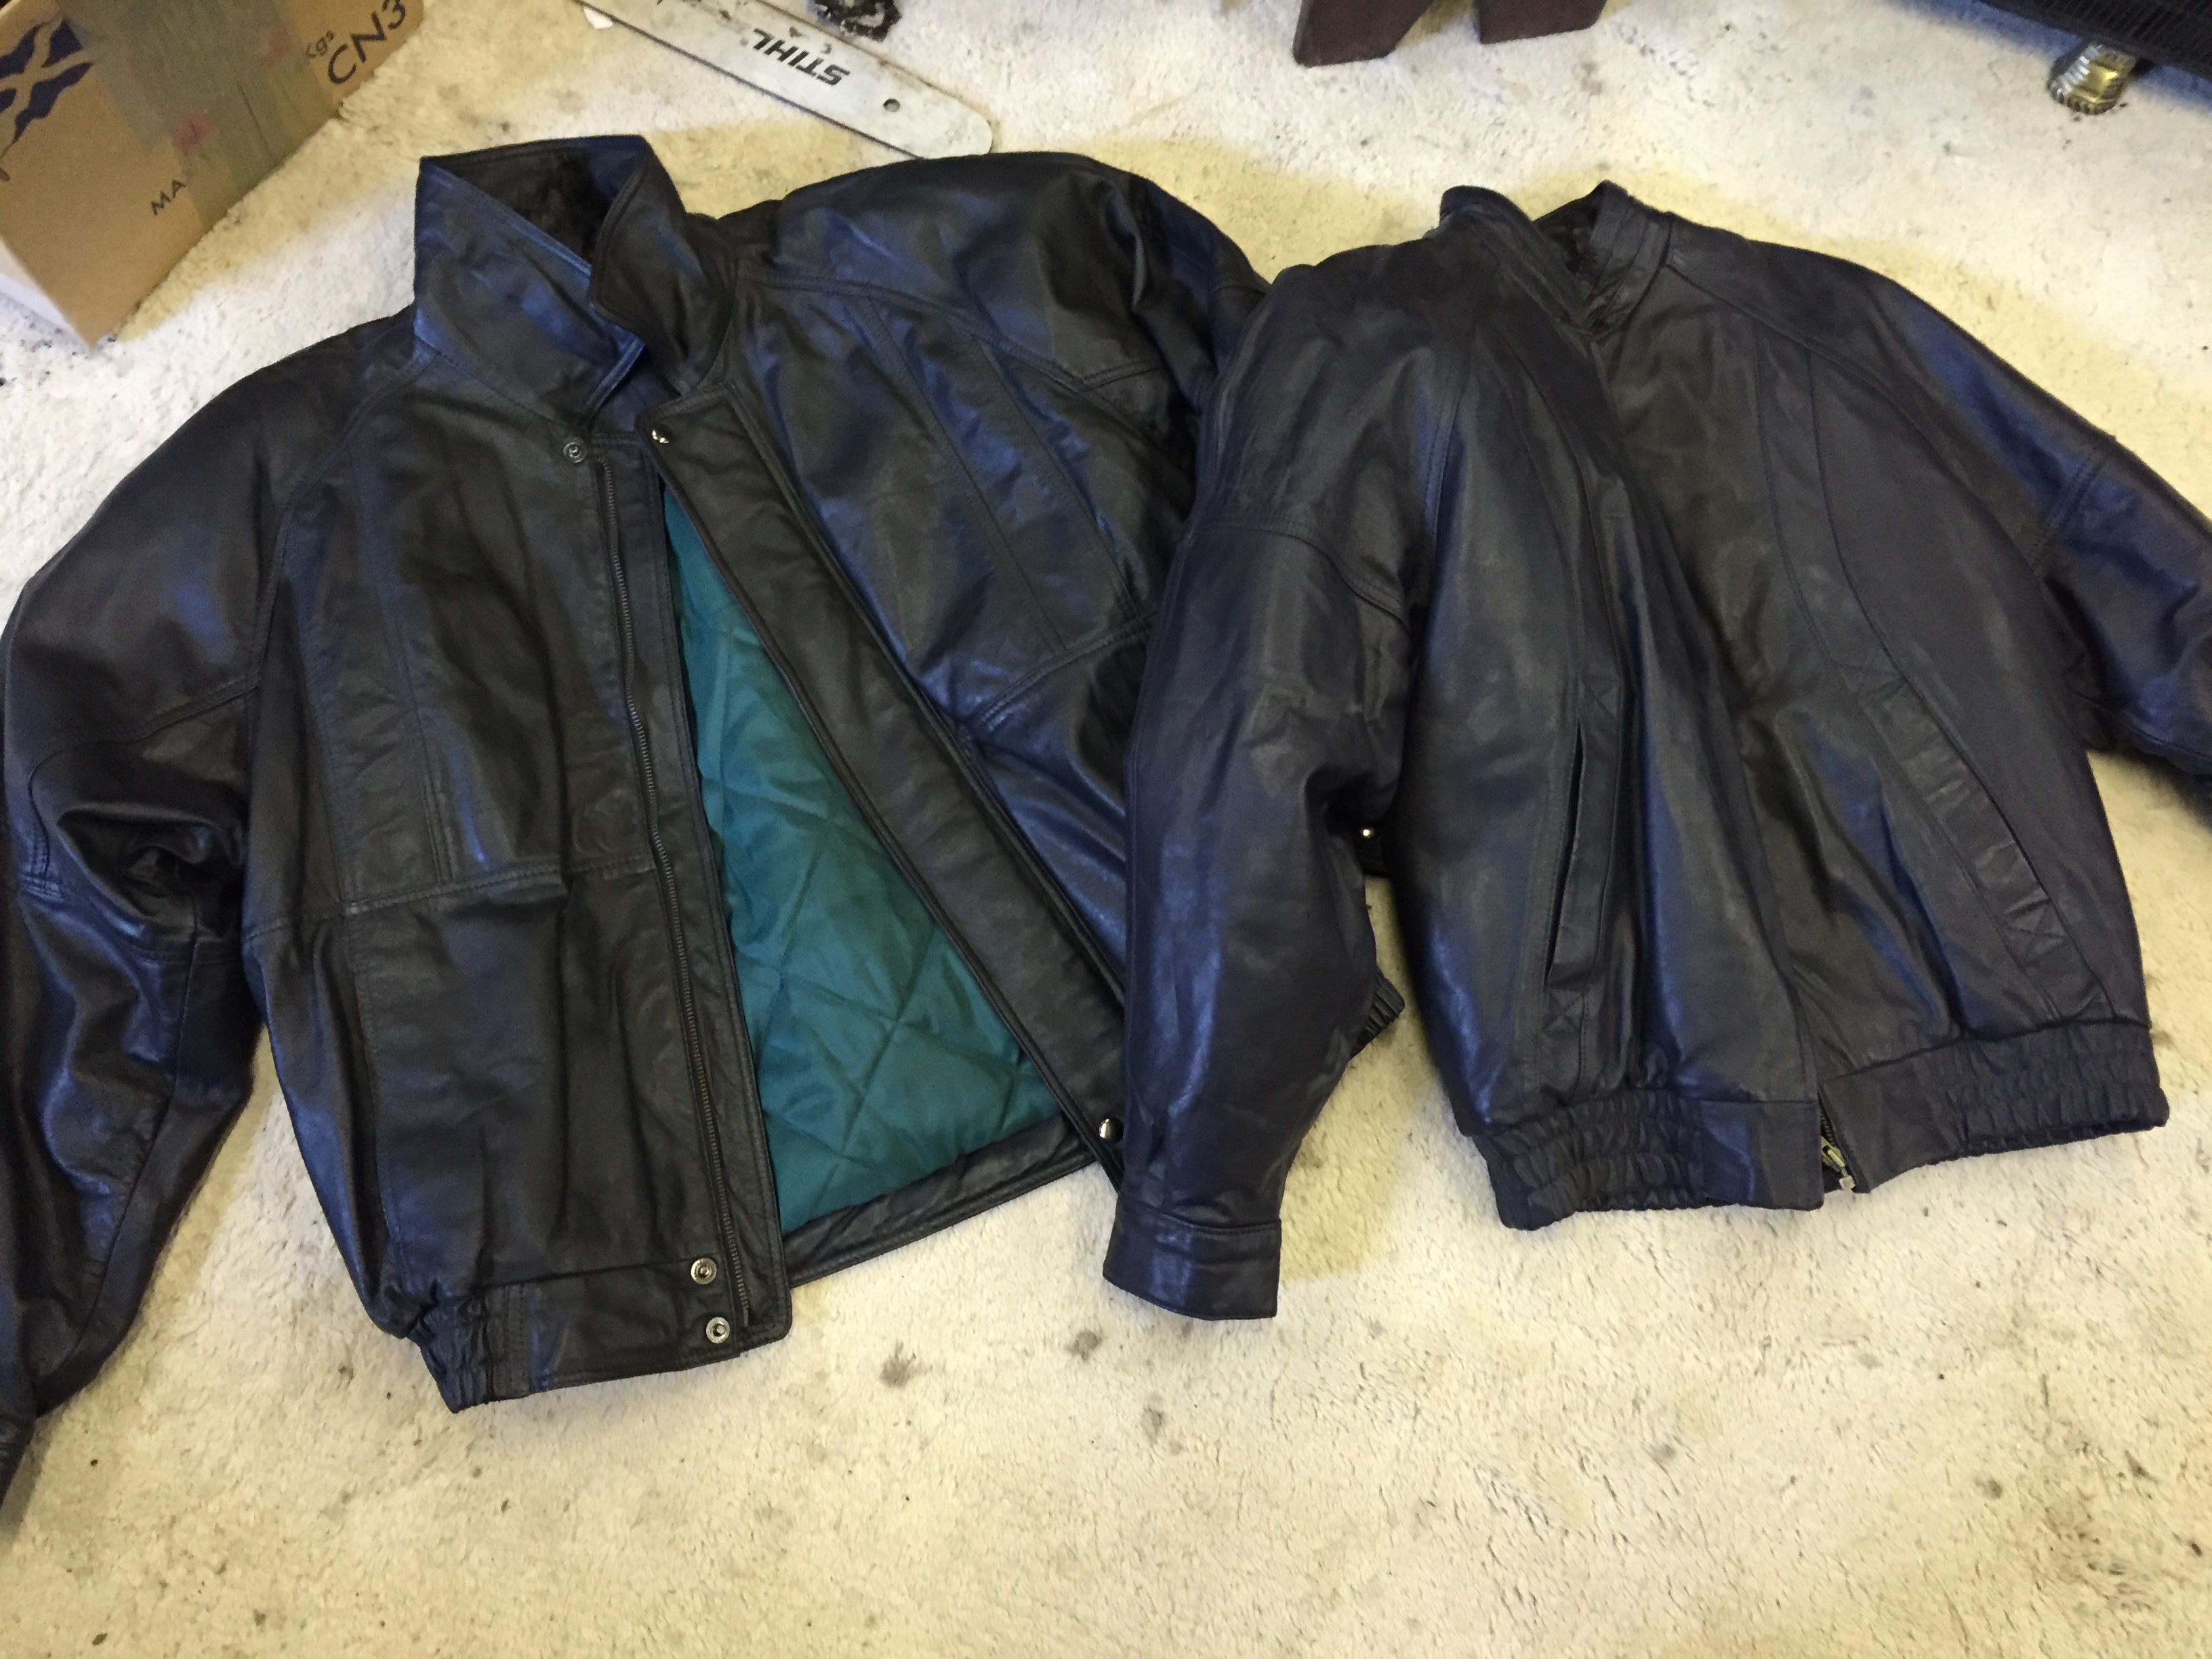 One medium one small bomber style leather jackets.